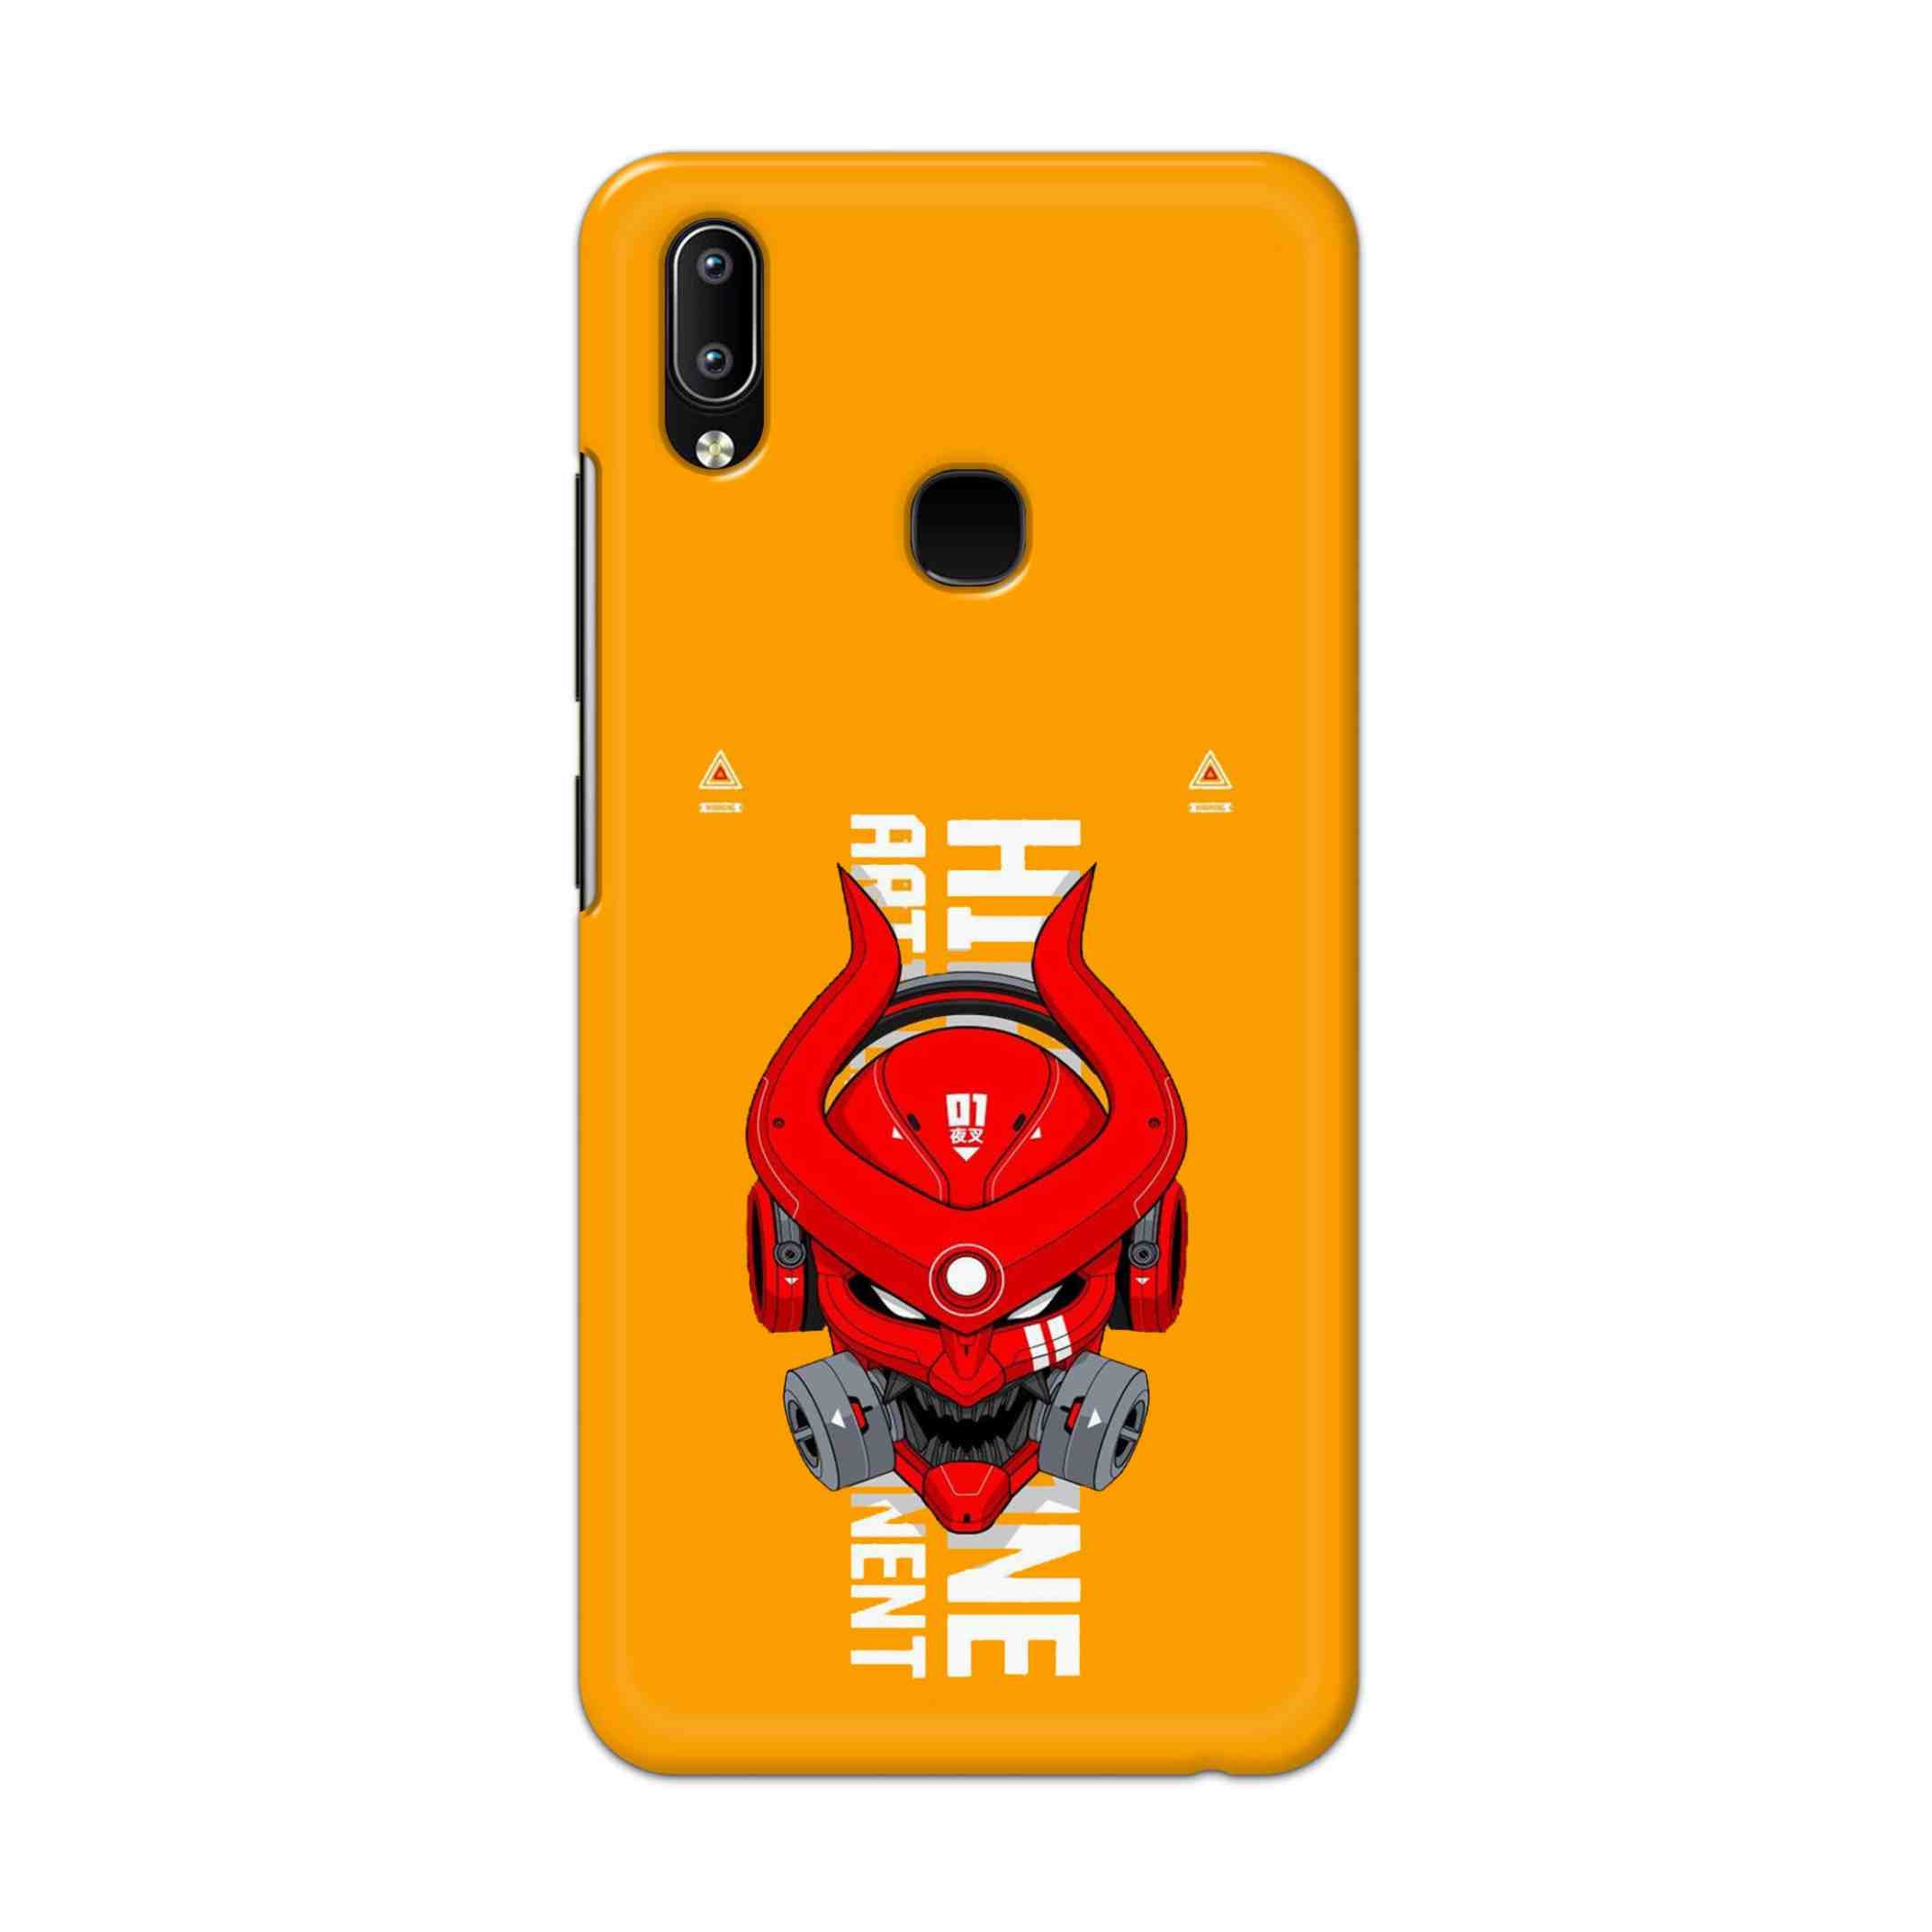 Buy Bull Skull Hard Back Mobile Phone Case Cover For Vivo Y95 / Y93 / Y91 Online